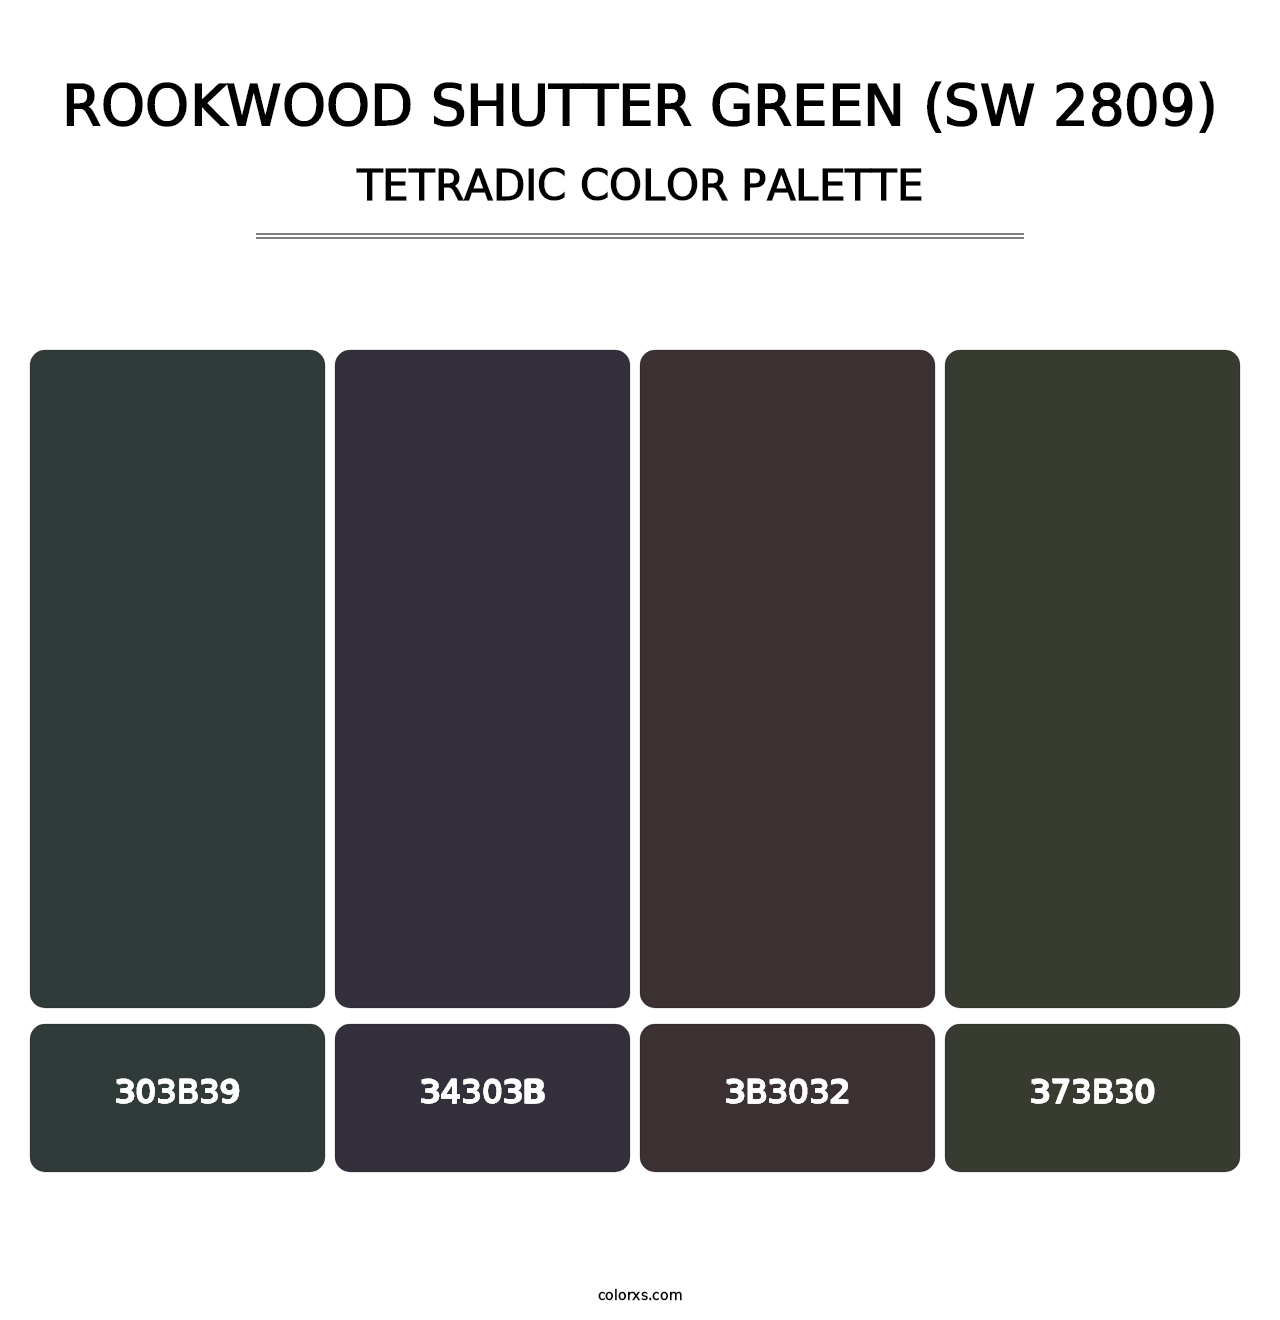 Rookwood Shutter Green (SW 2809) - Tetradic Color Palette